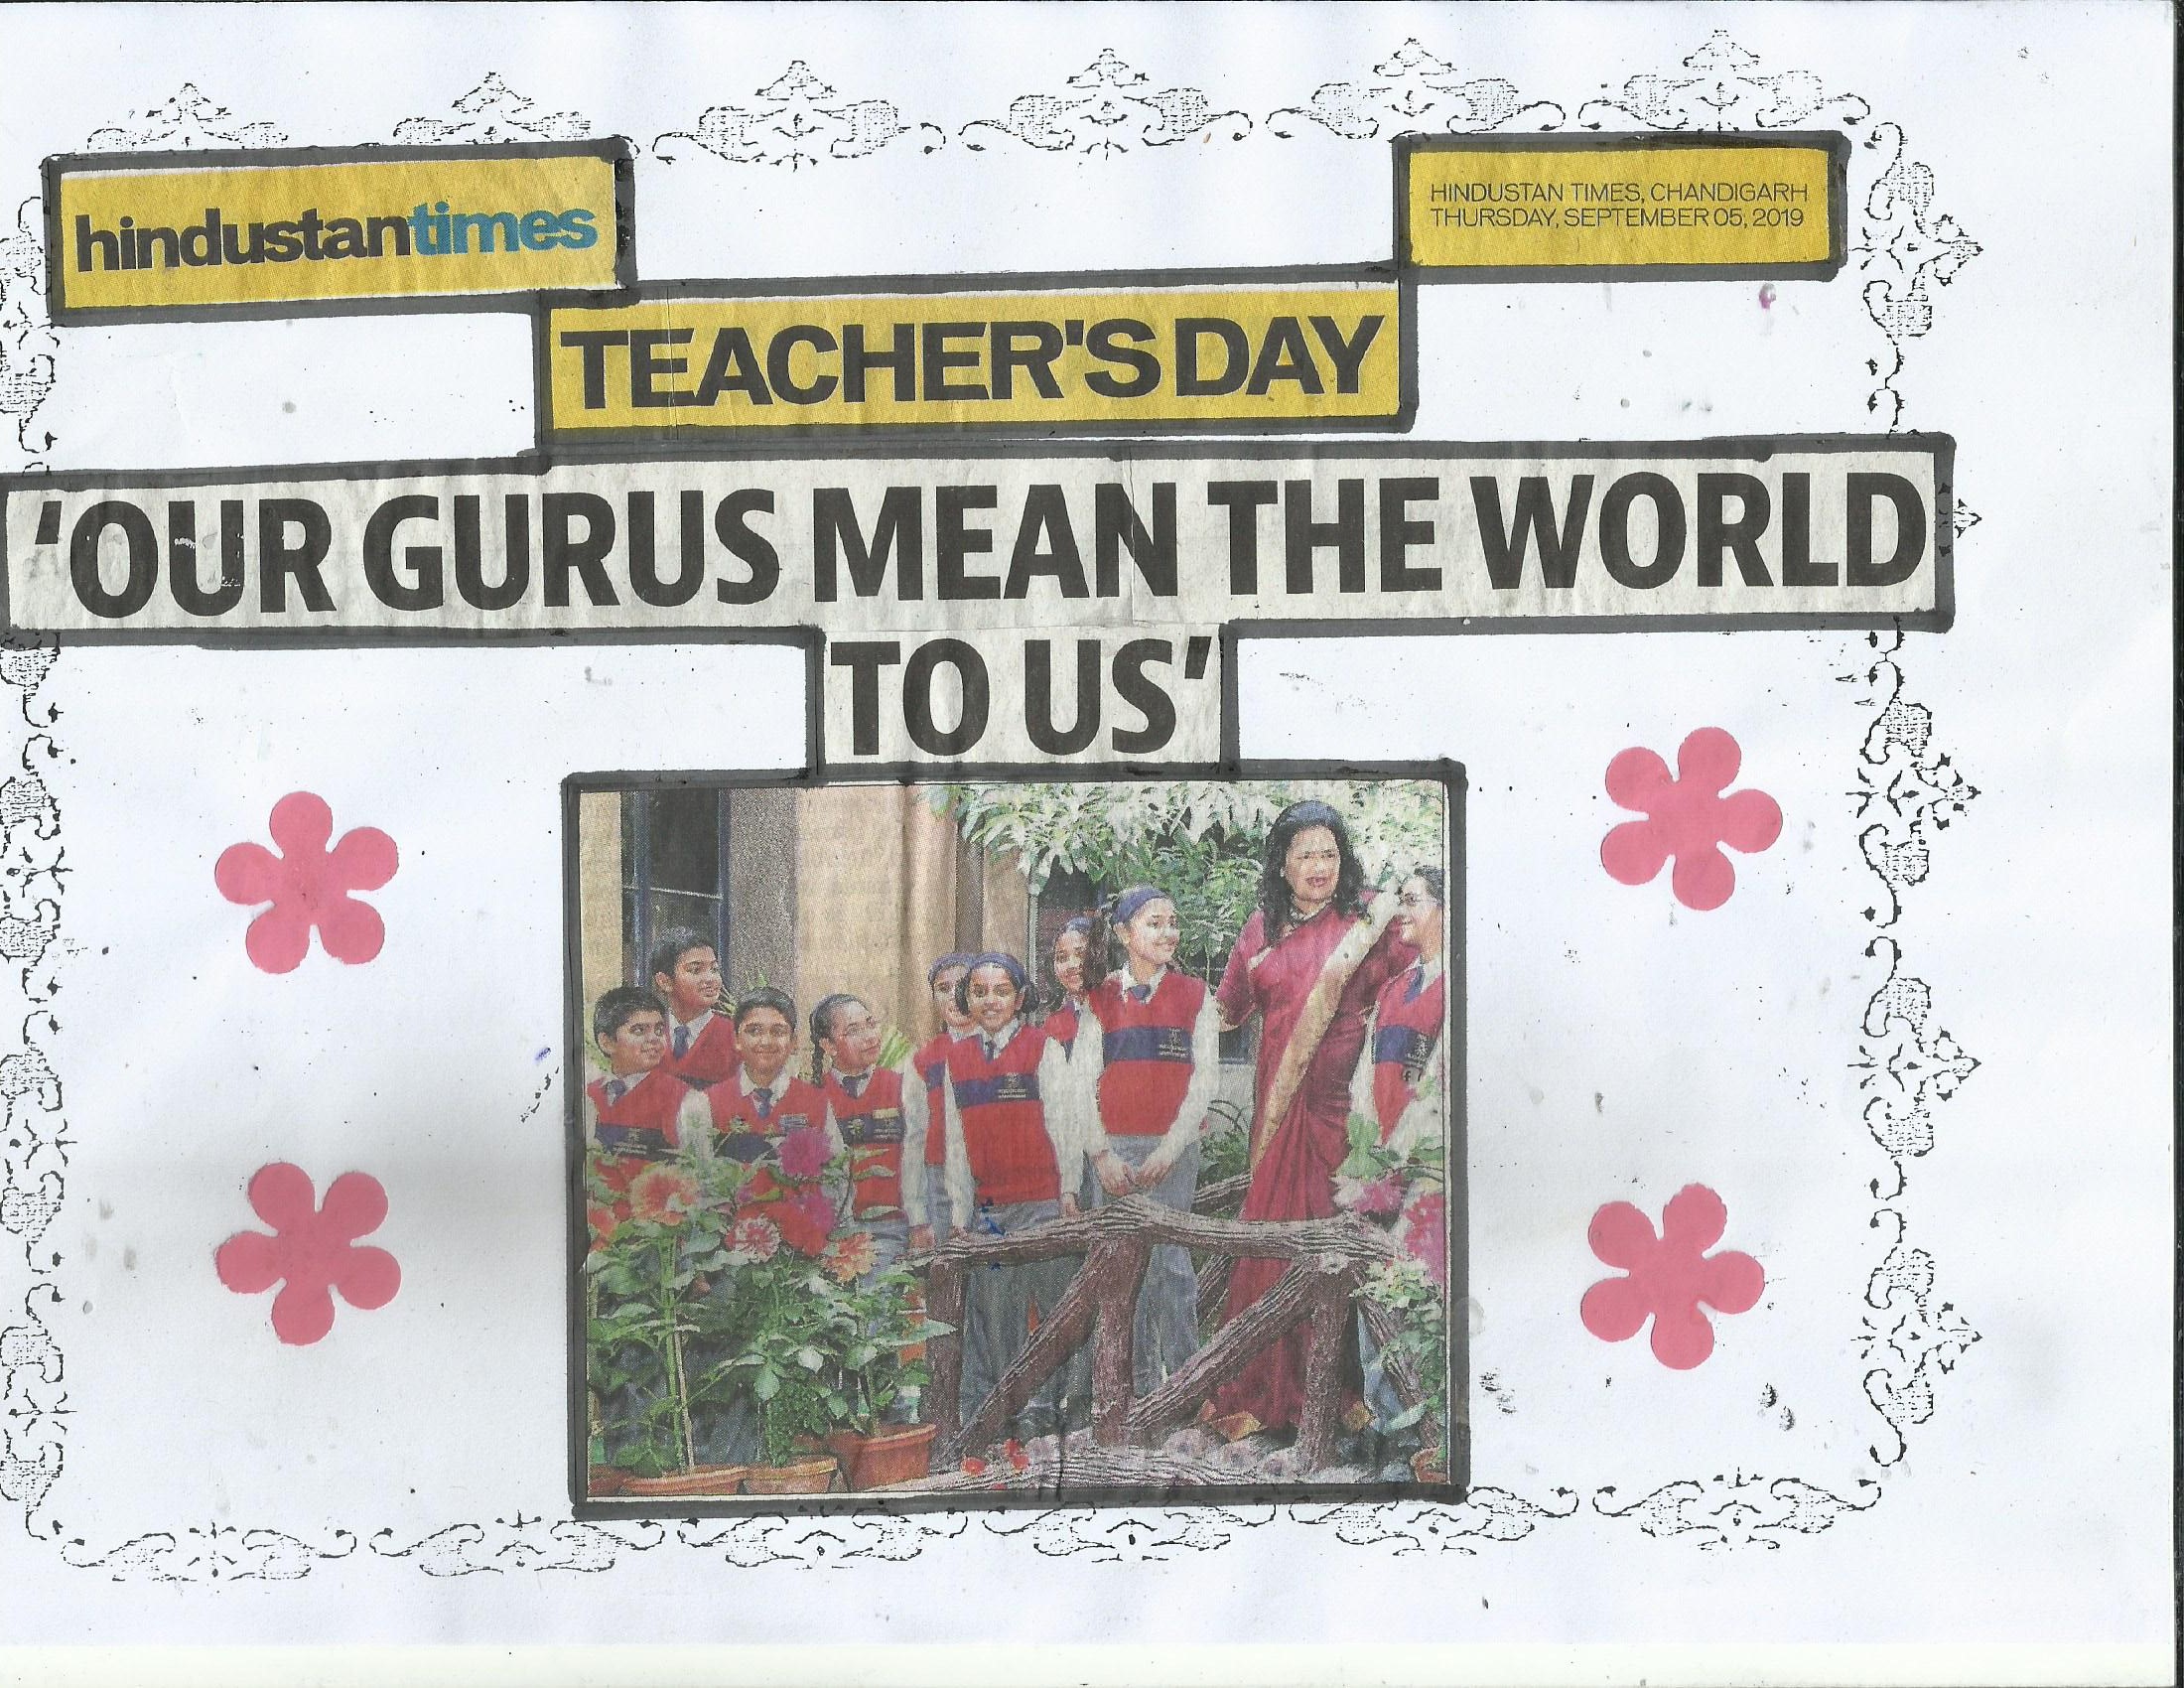 Director Madam’s Teacher’s Day Article - Ryan International School, Dugri